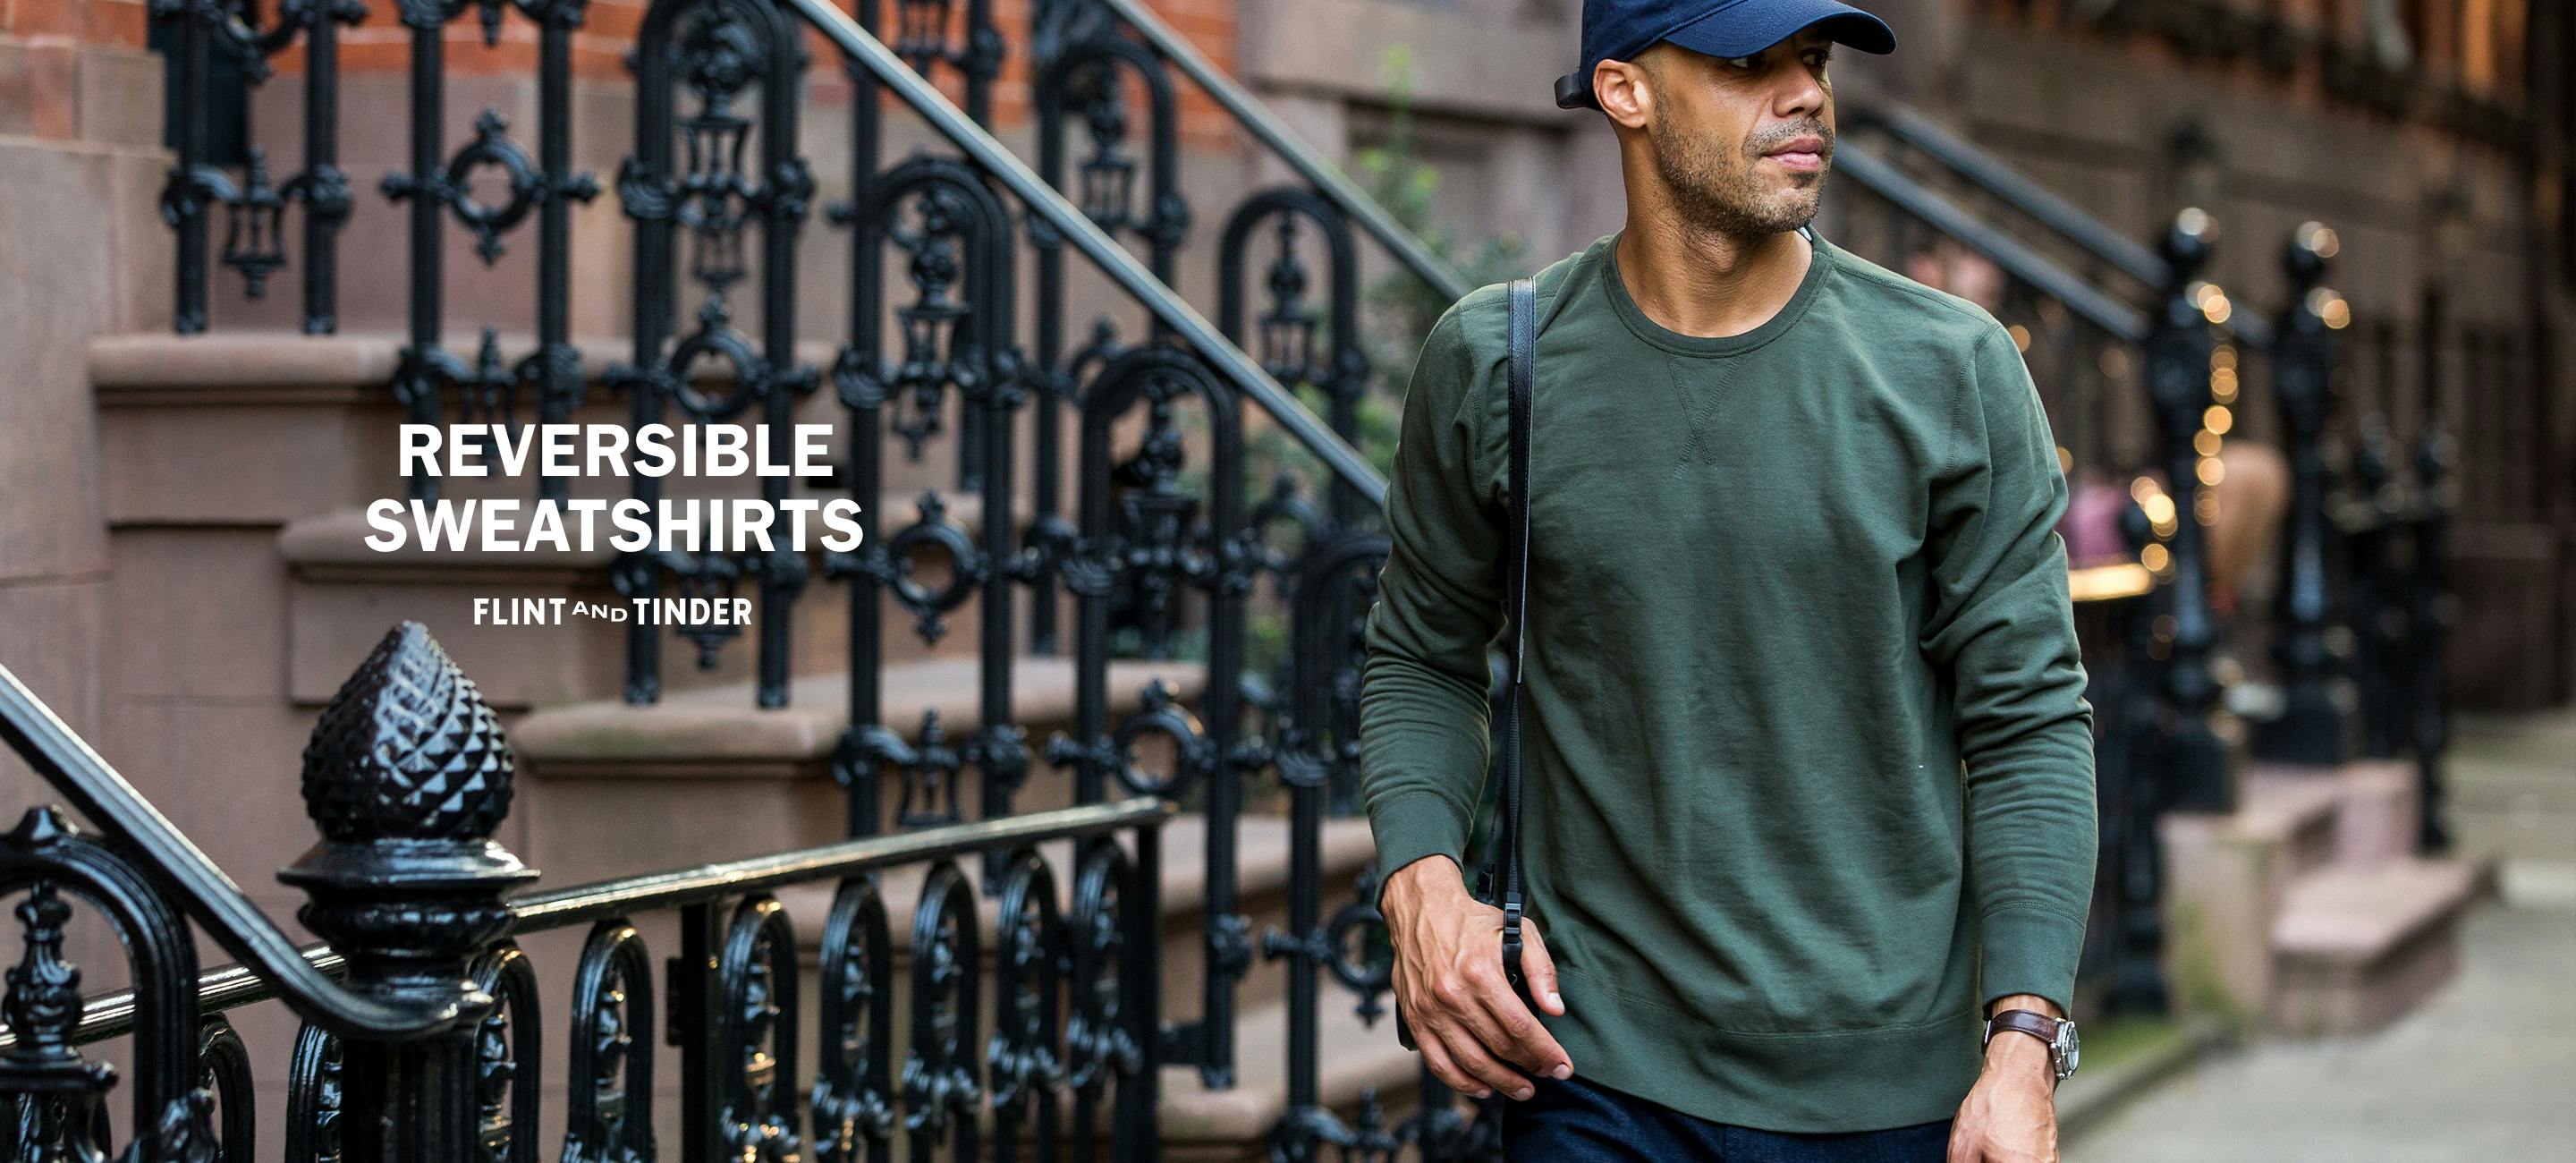 Flint and Tinder: Reversible Sweatshirts